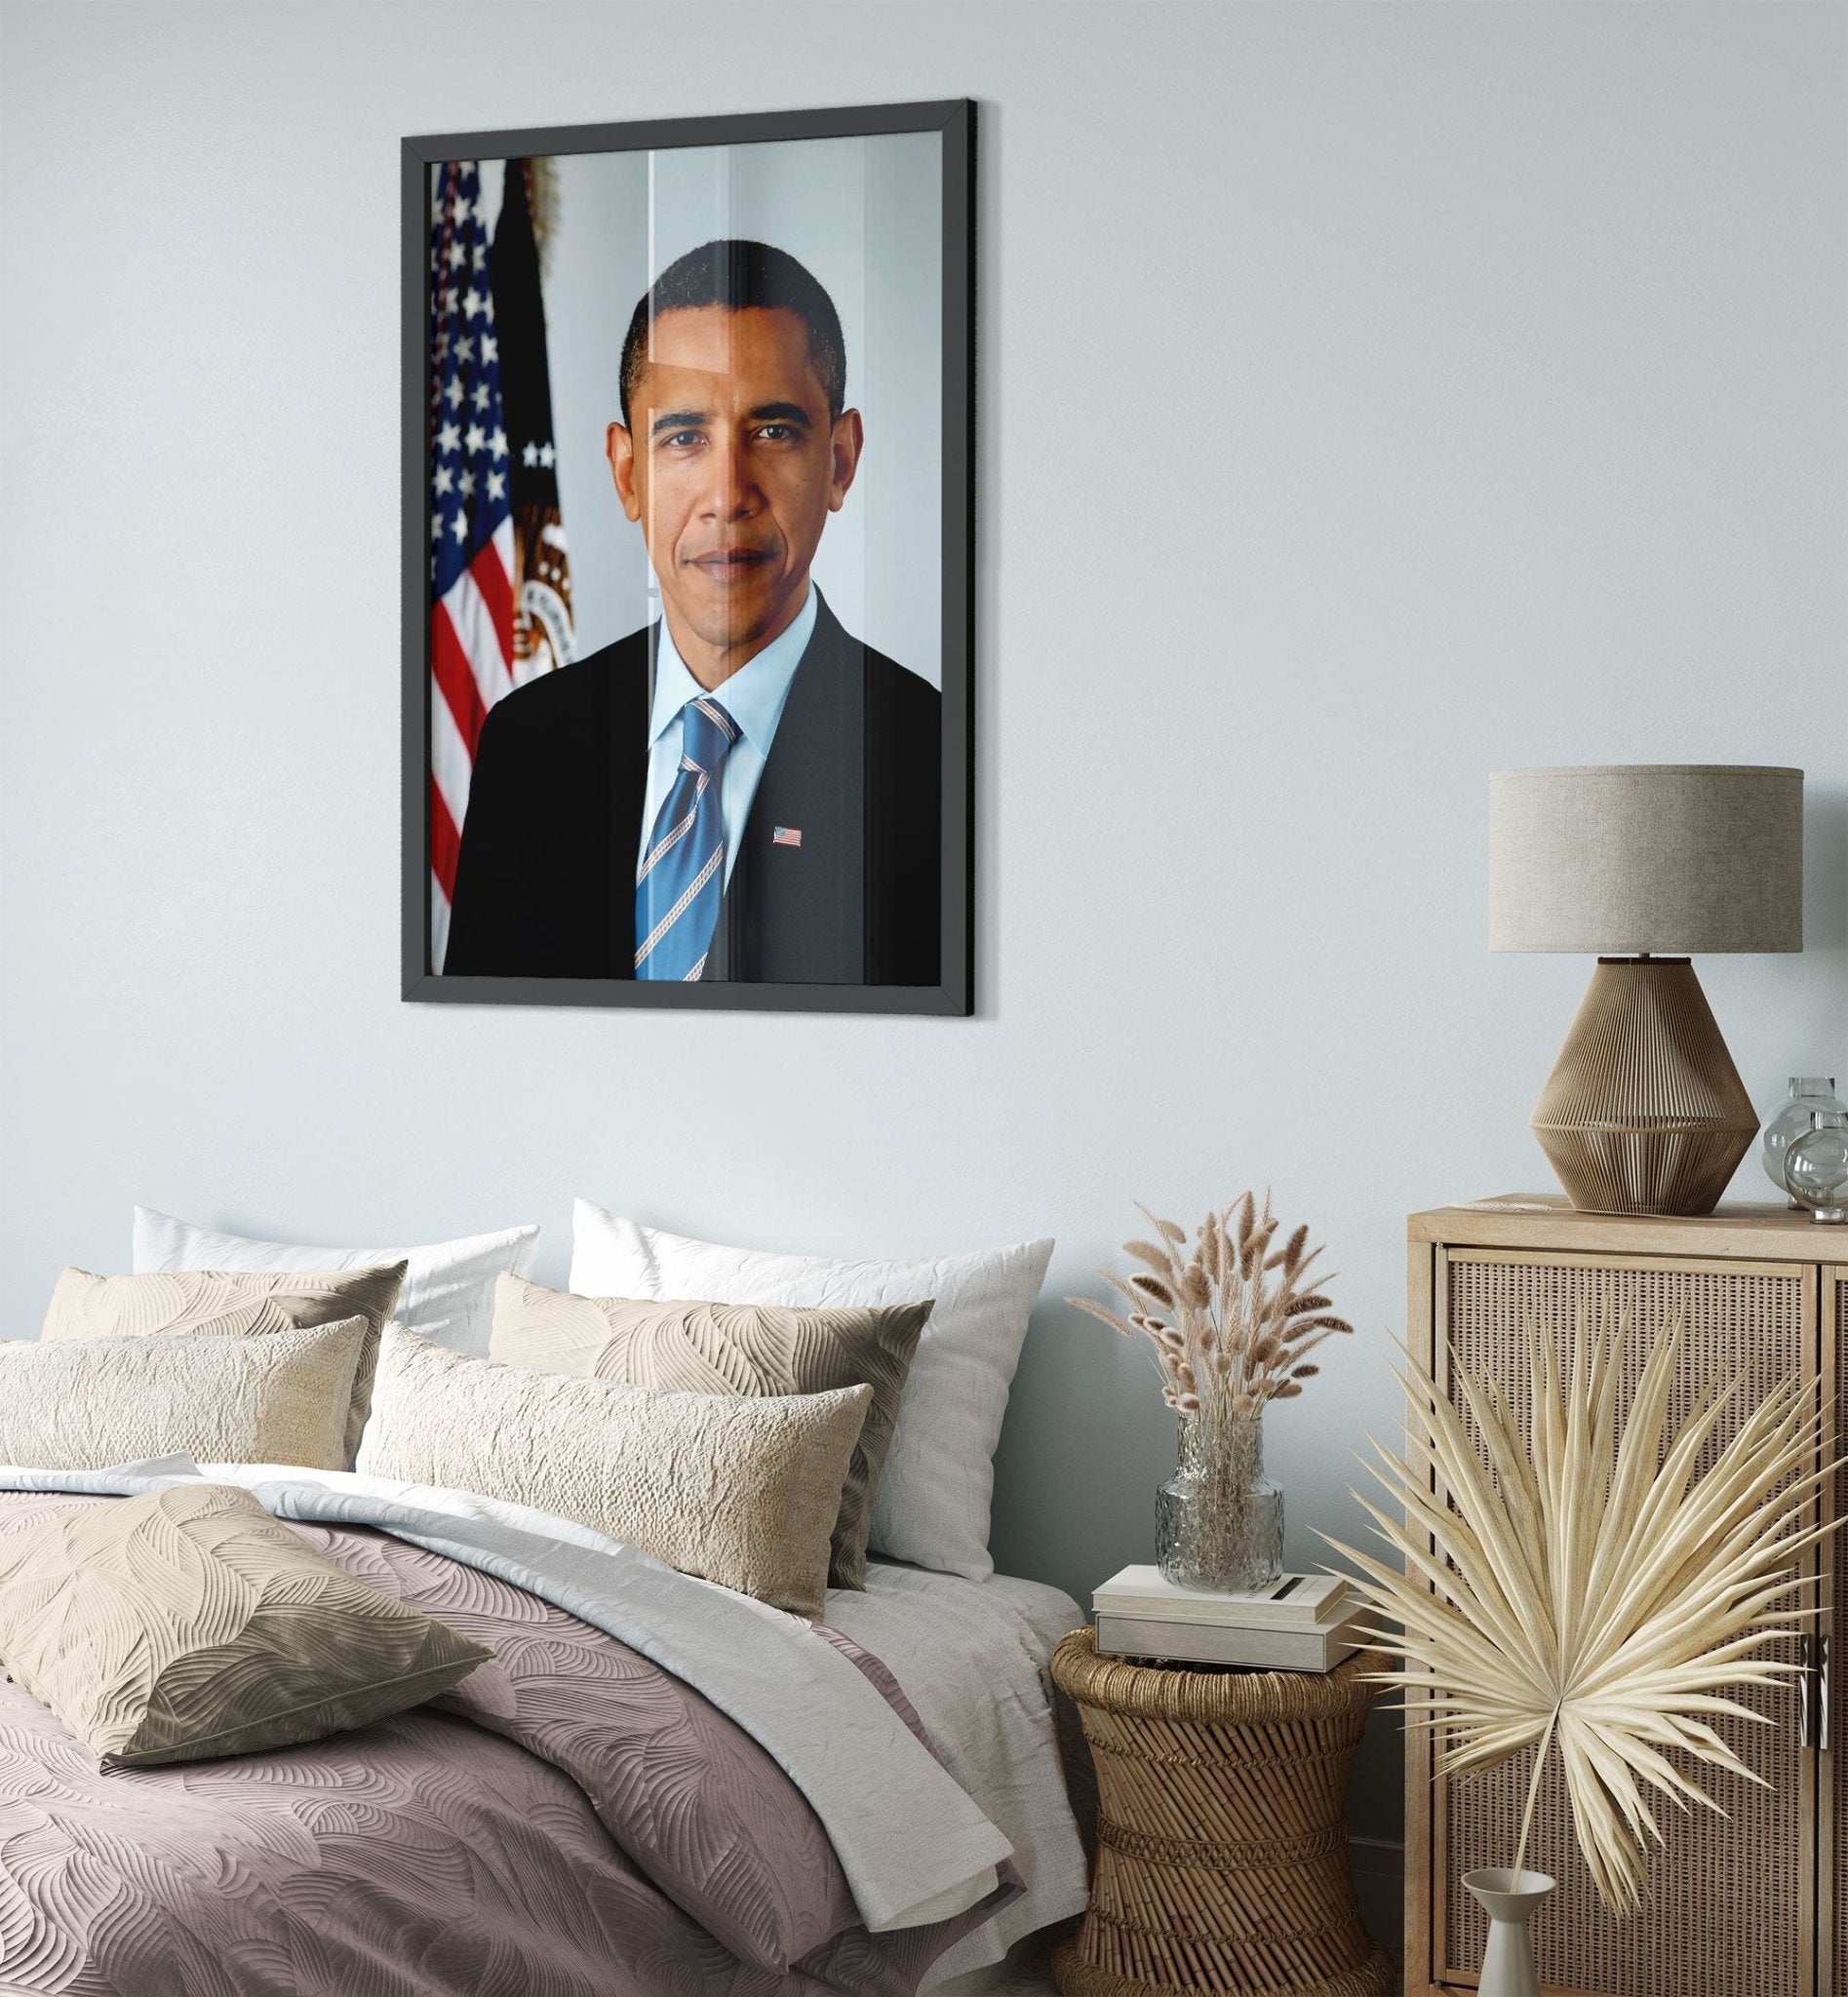 Barrack Obama Framed, 44th President Of These United States, Vintage Photo Portrait - Barrack Obama Framed Print UK, EU USA Domestic Shipping - WallArtPrints4U